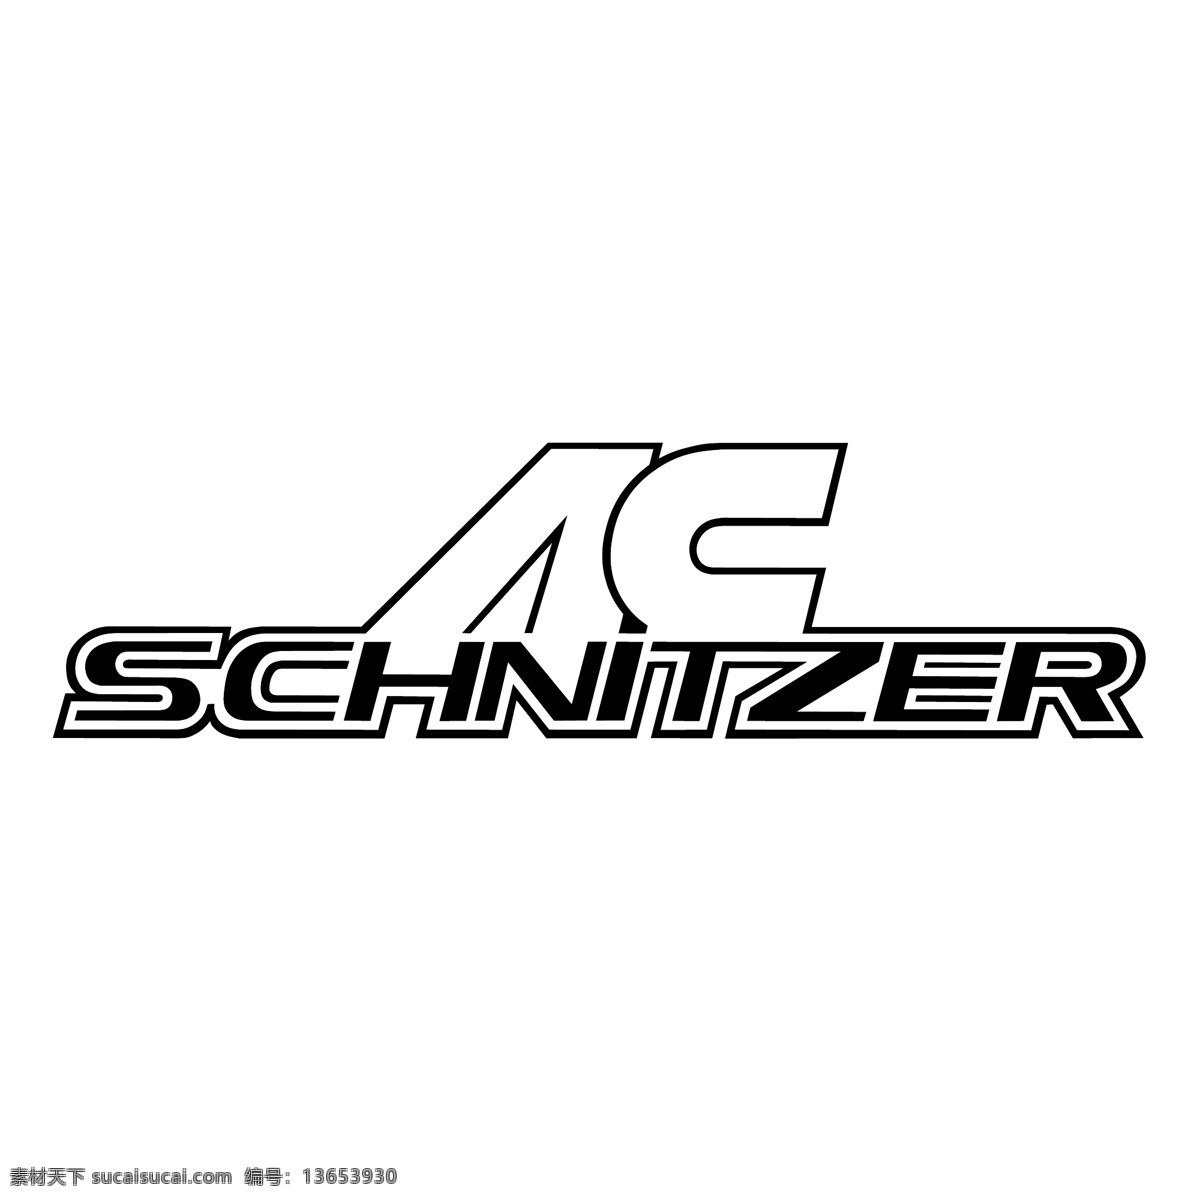 acschnitzer 免费 标志 白色